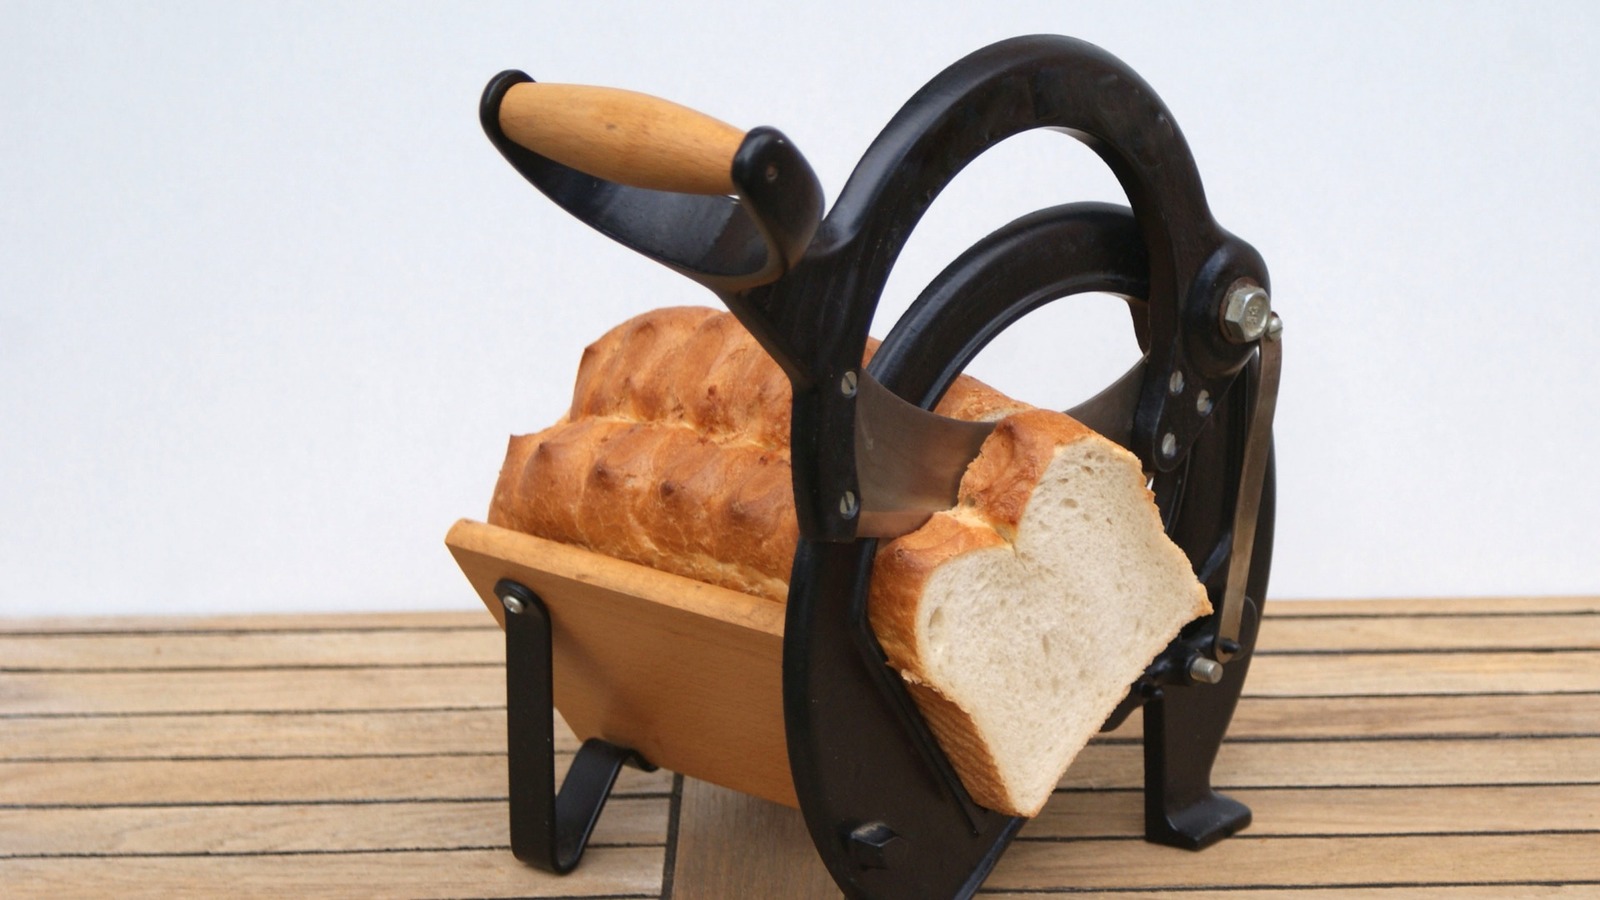 Zassenhaus - Bread slicing machine Classic